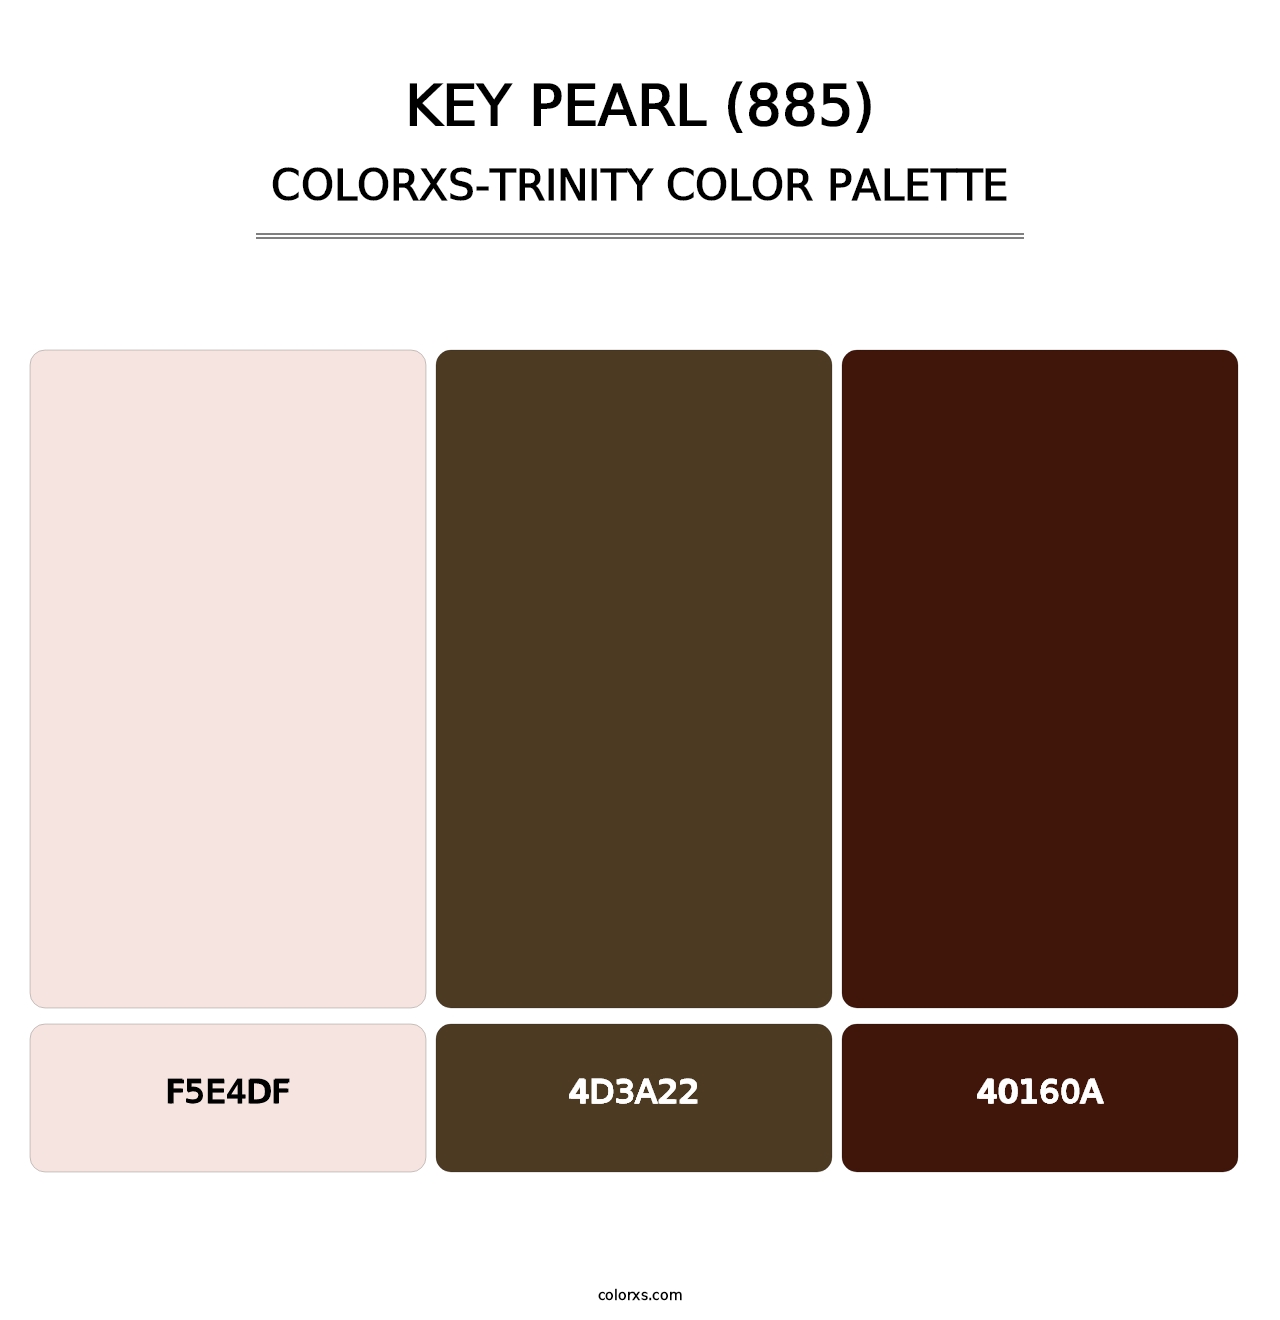 Key Pearl (885) - Colorxs Trinity Palette